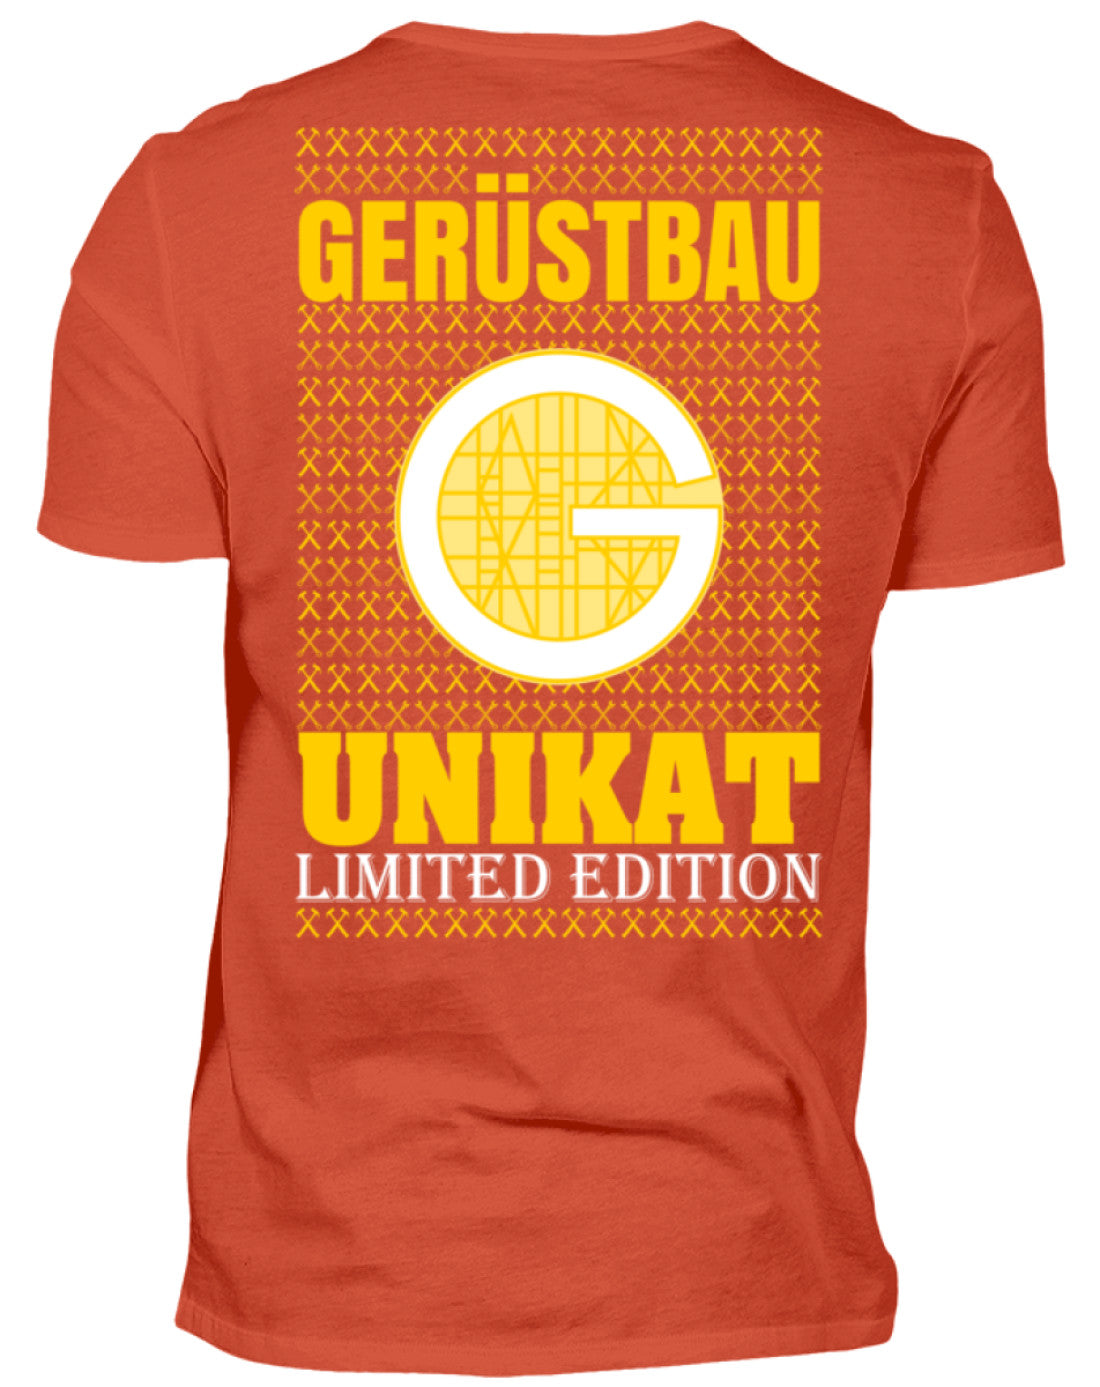 Gerüstbauer Unikat €24.95 Gerüstbauer - Shop >>